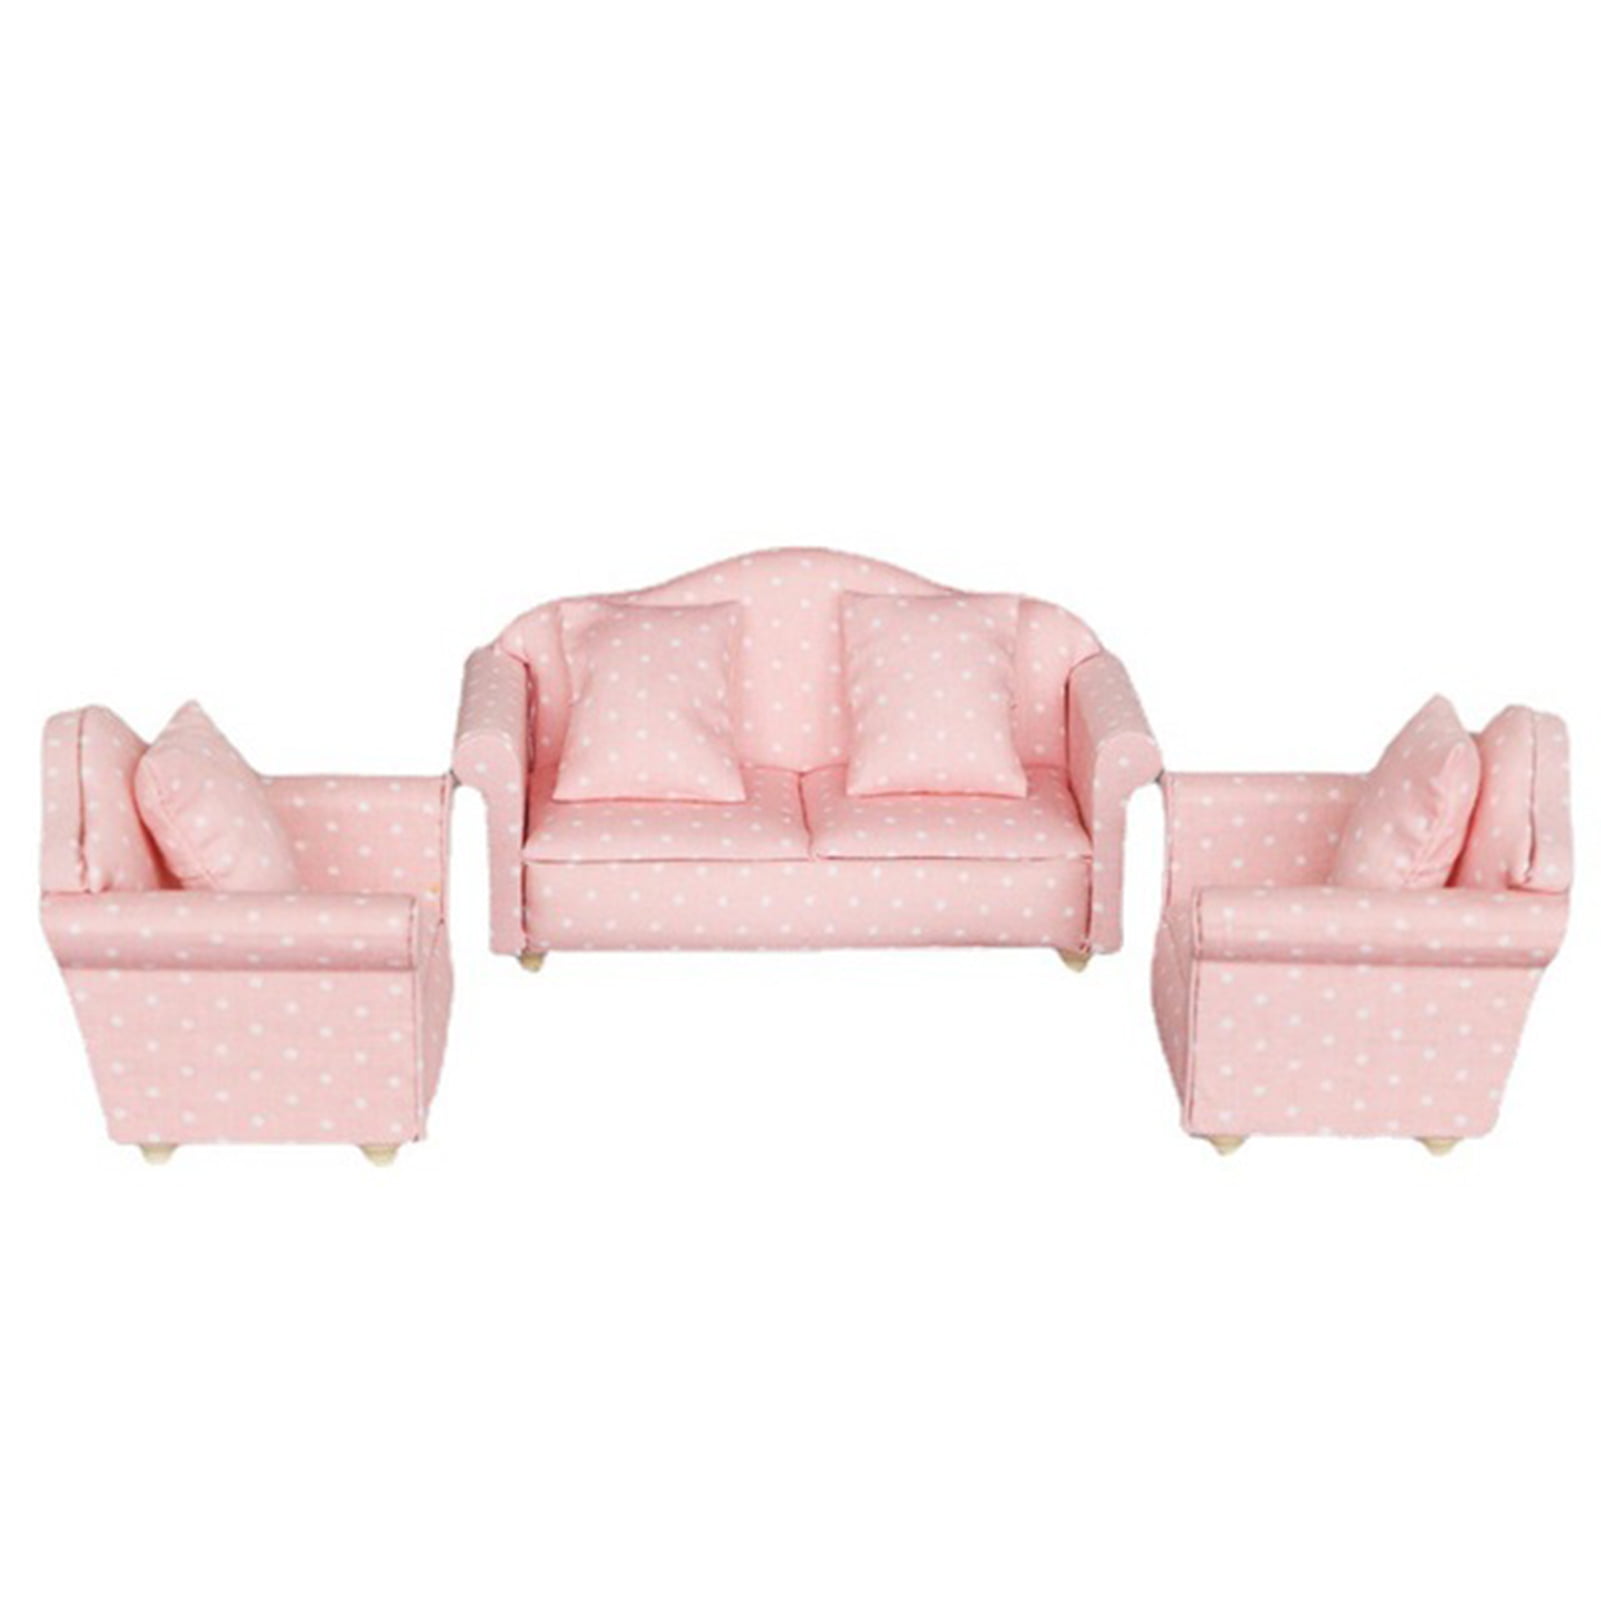 1:12 living room elegant chair Sofa 3pcs dollhouse miniature furniture set 